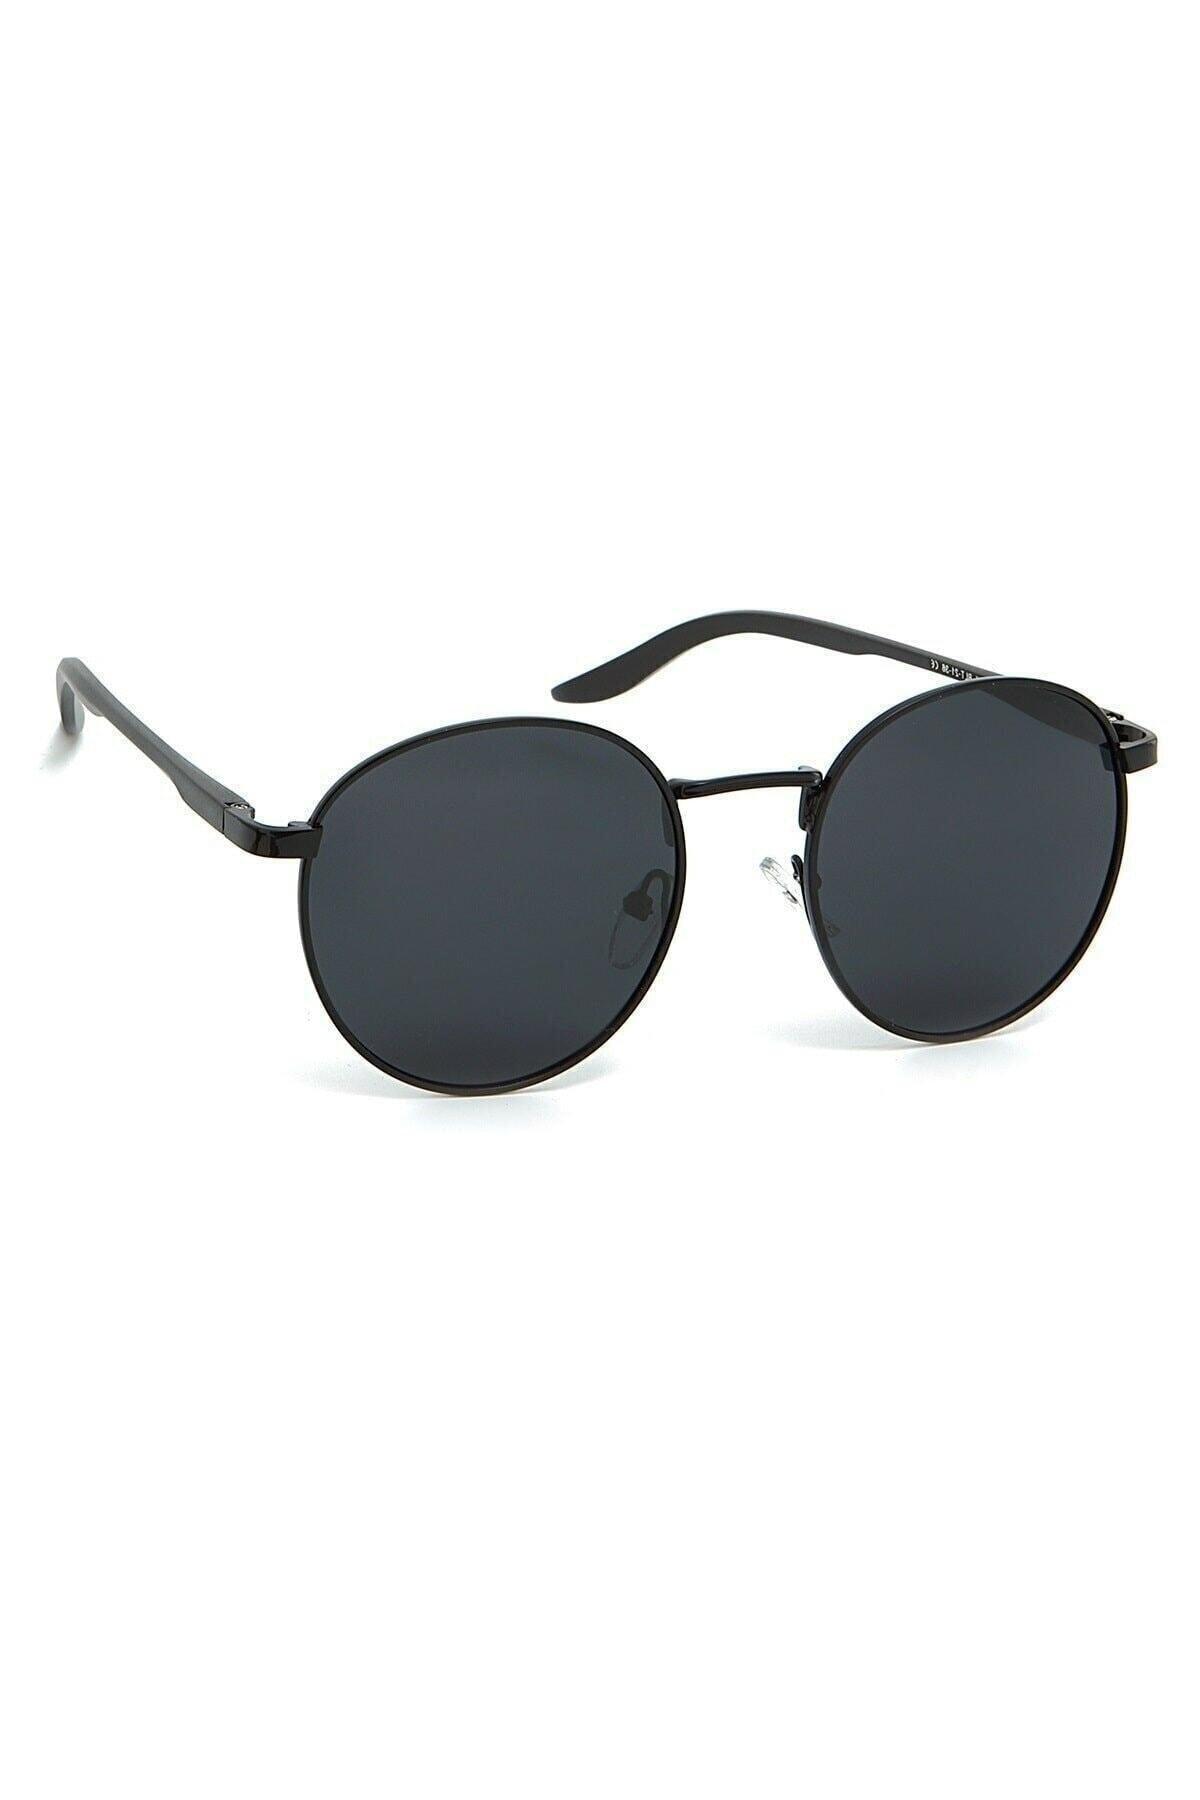 Risus Unisex Black Round Oval Polarized Lens Sunglasses - Swordslife